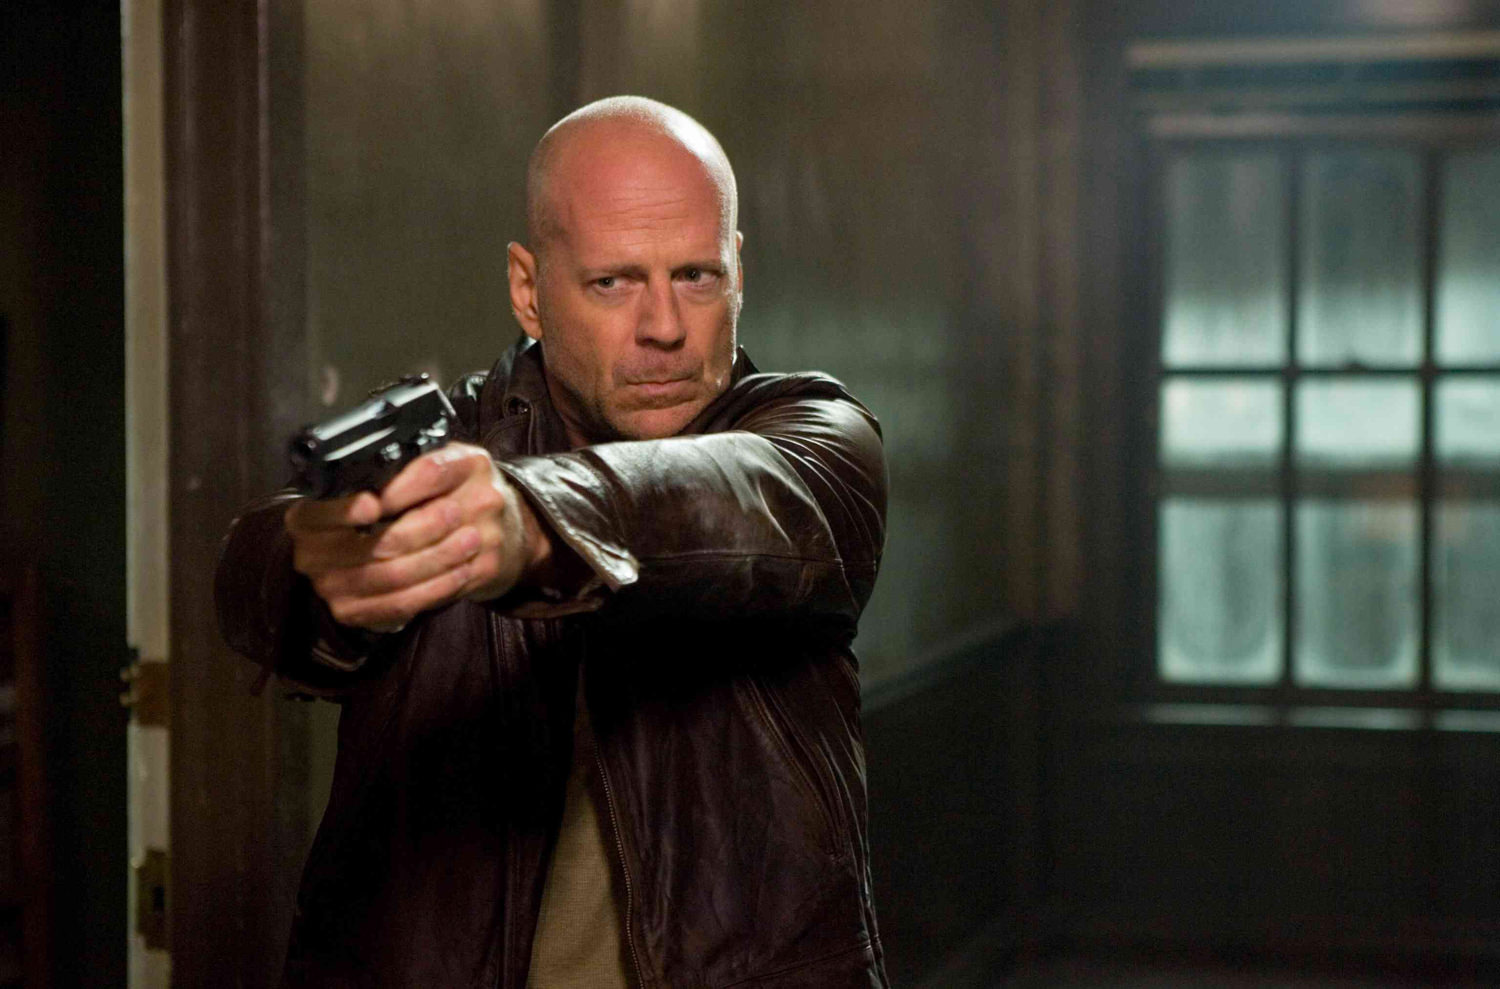 Bruce Willis as John McClane takes aim in LIVE FREE OR DIE HARD.